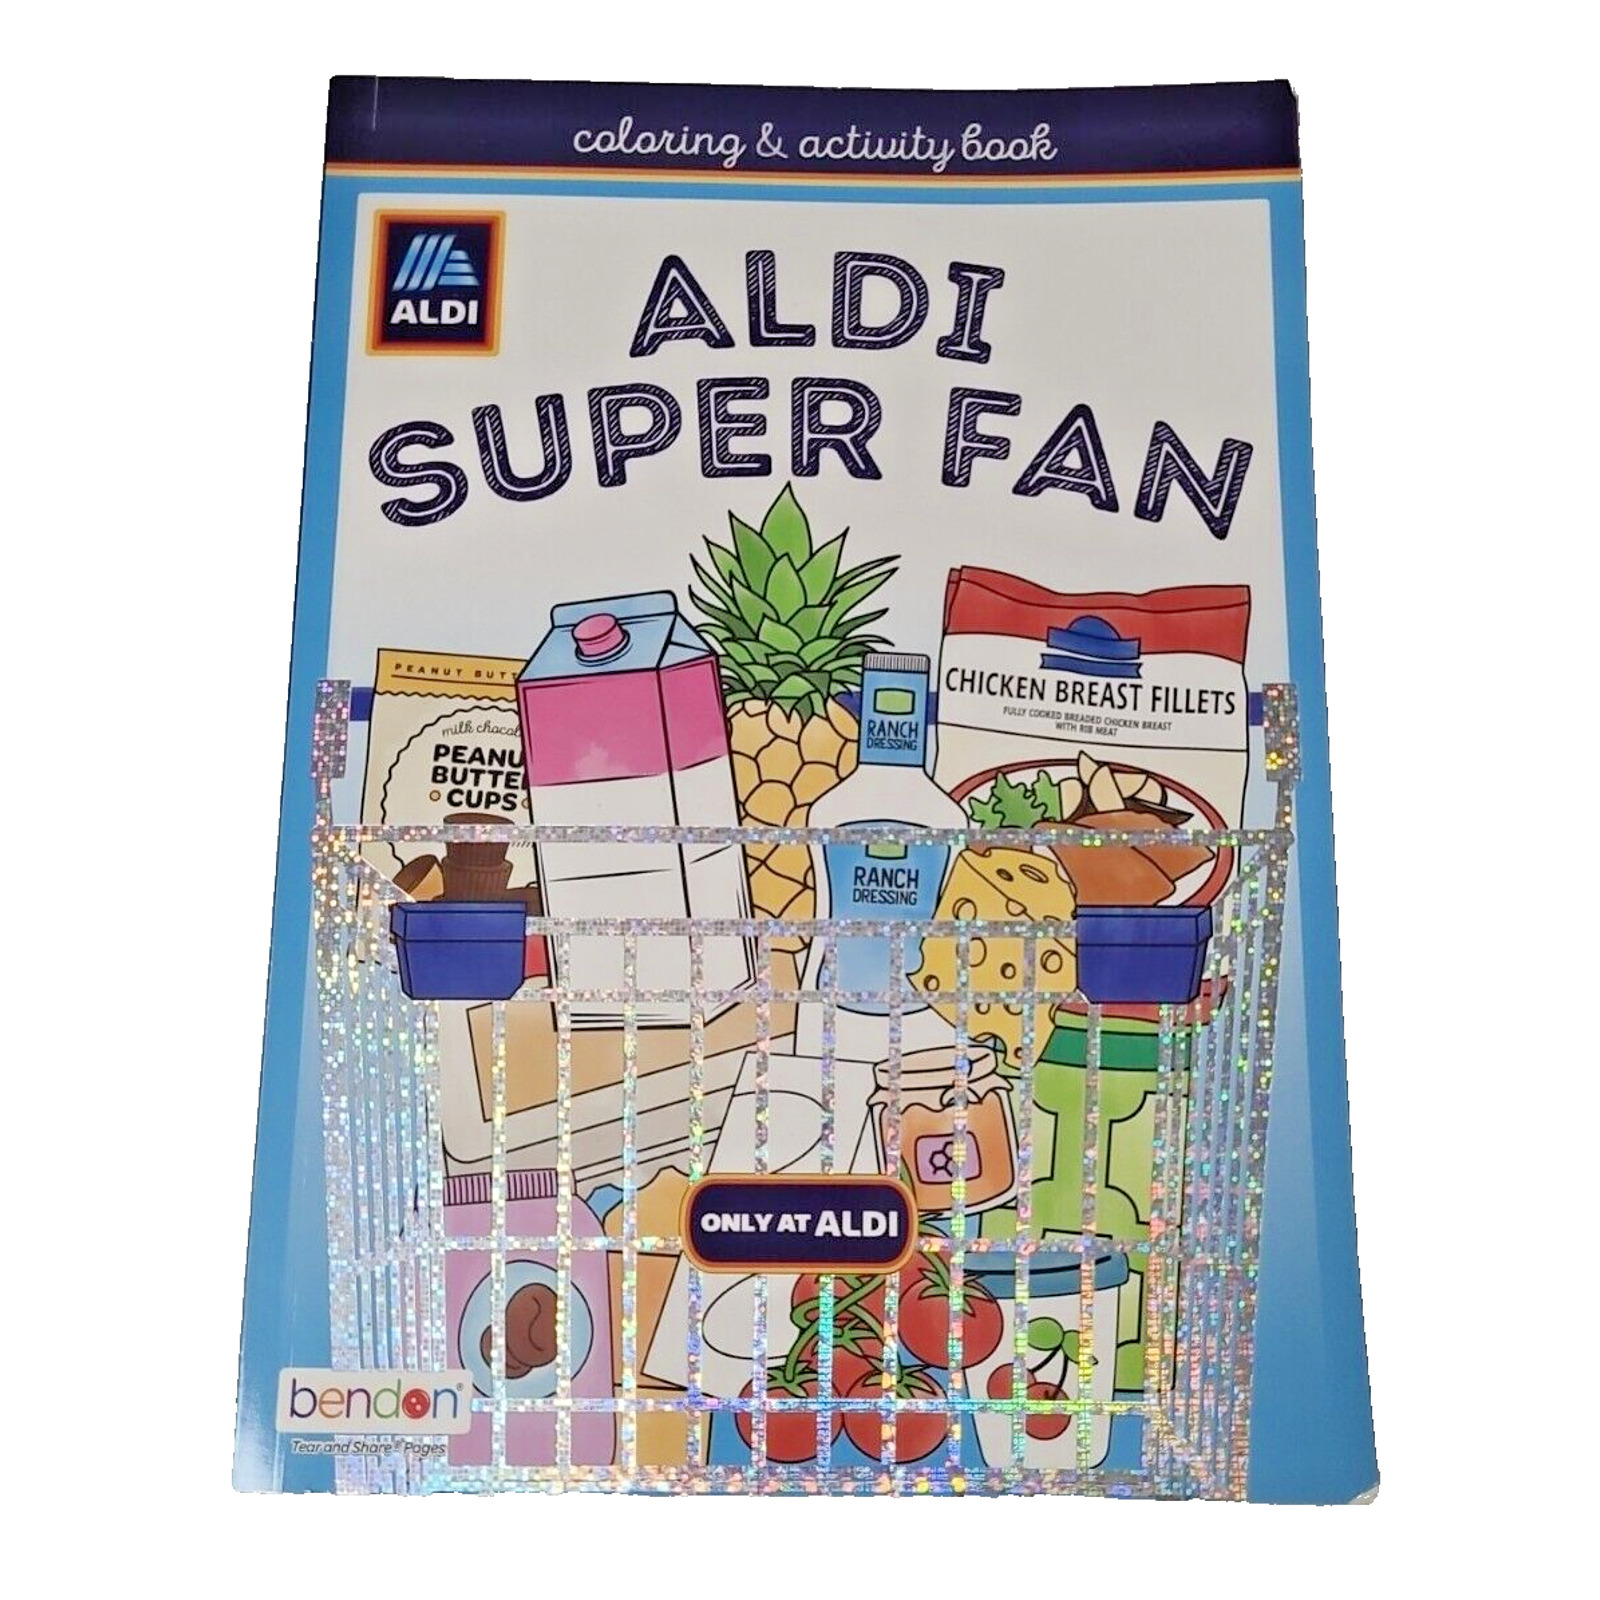 New Aldi Super Fan Coloring and Activity Book NEW Aldi Finds Bendon Food Treats